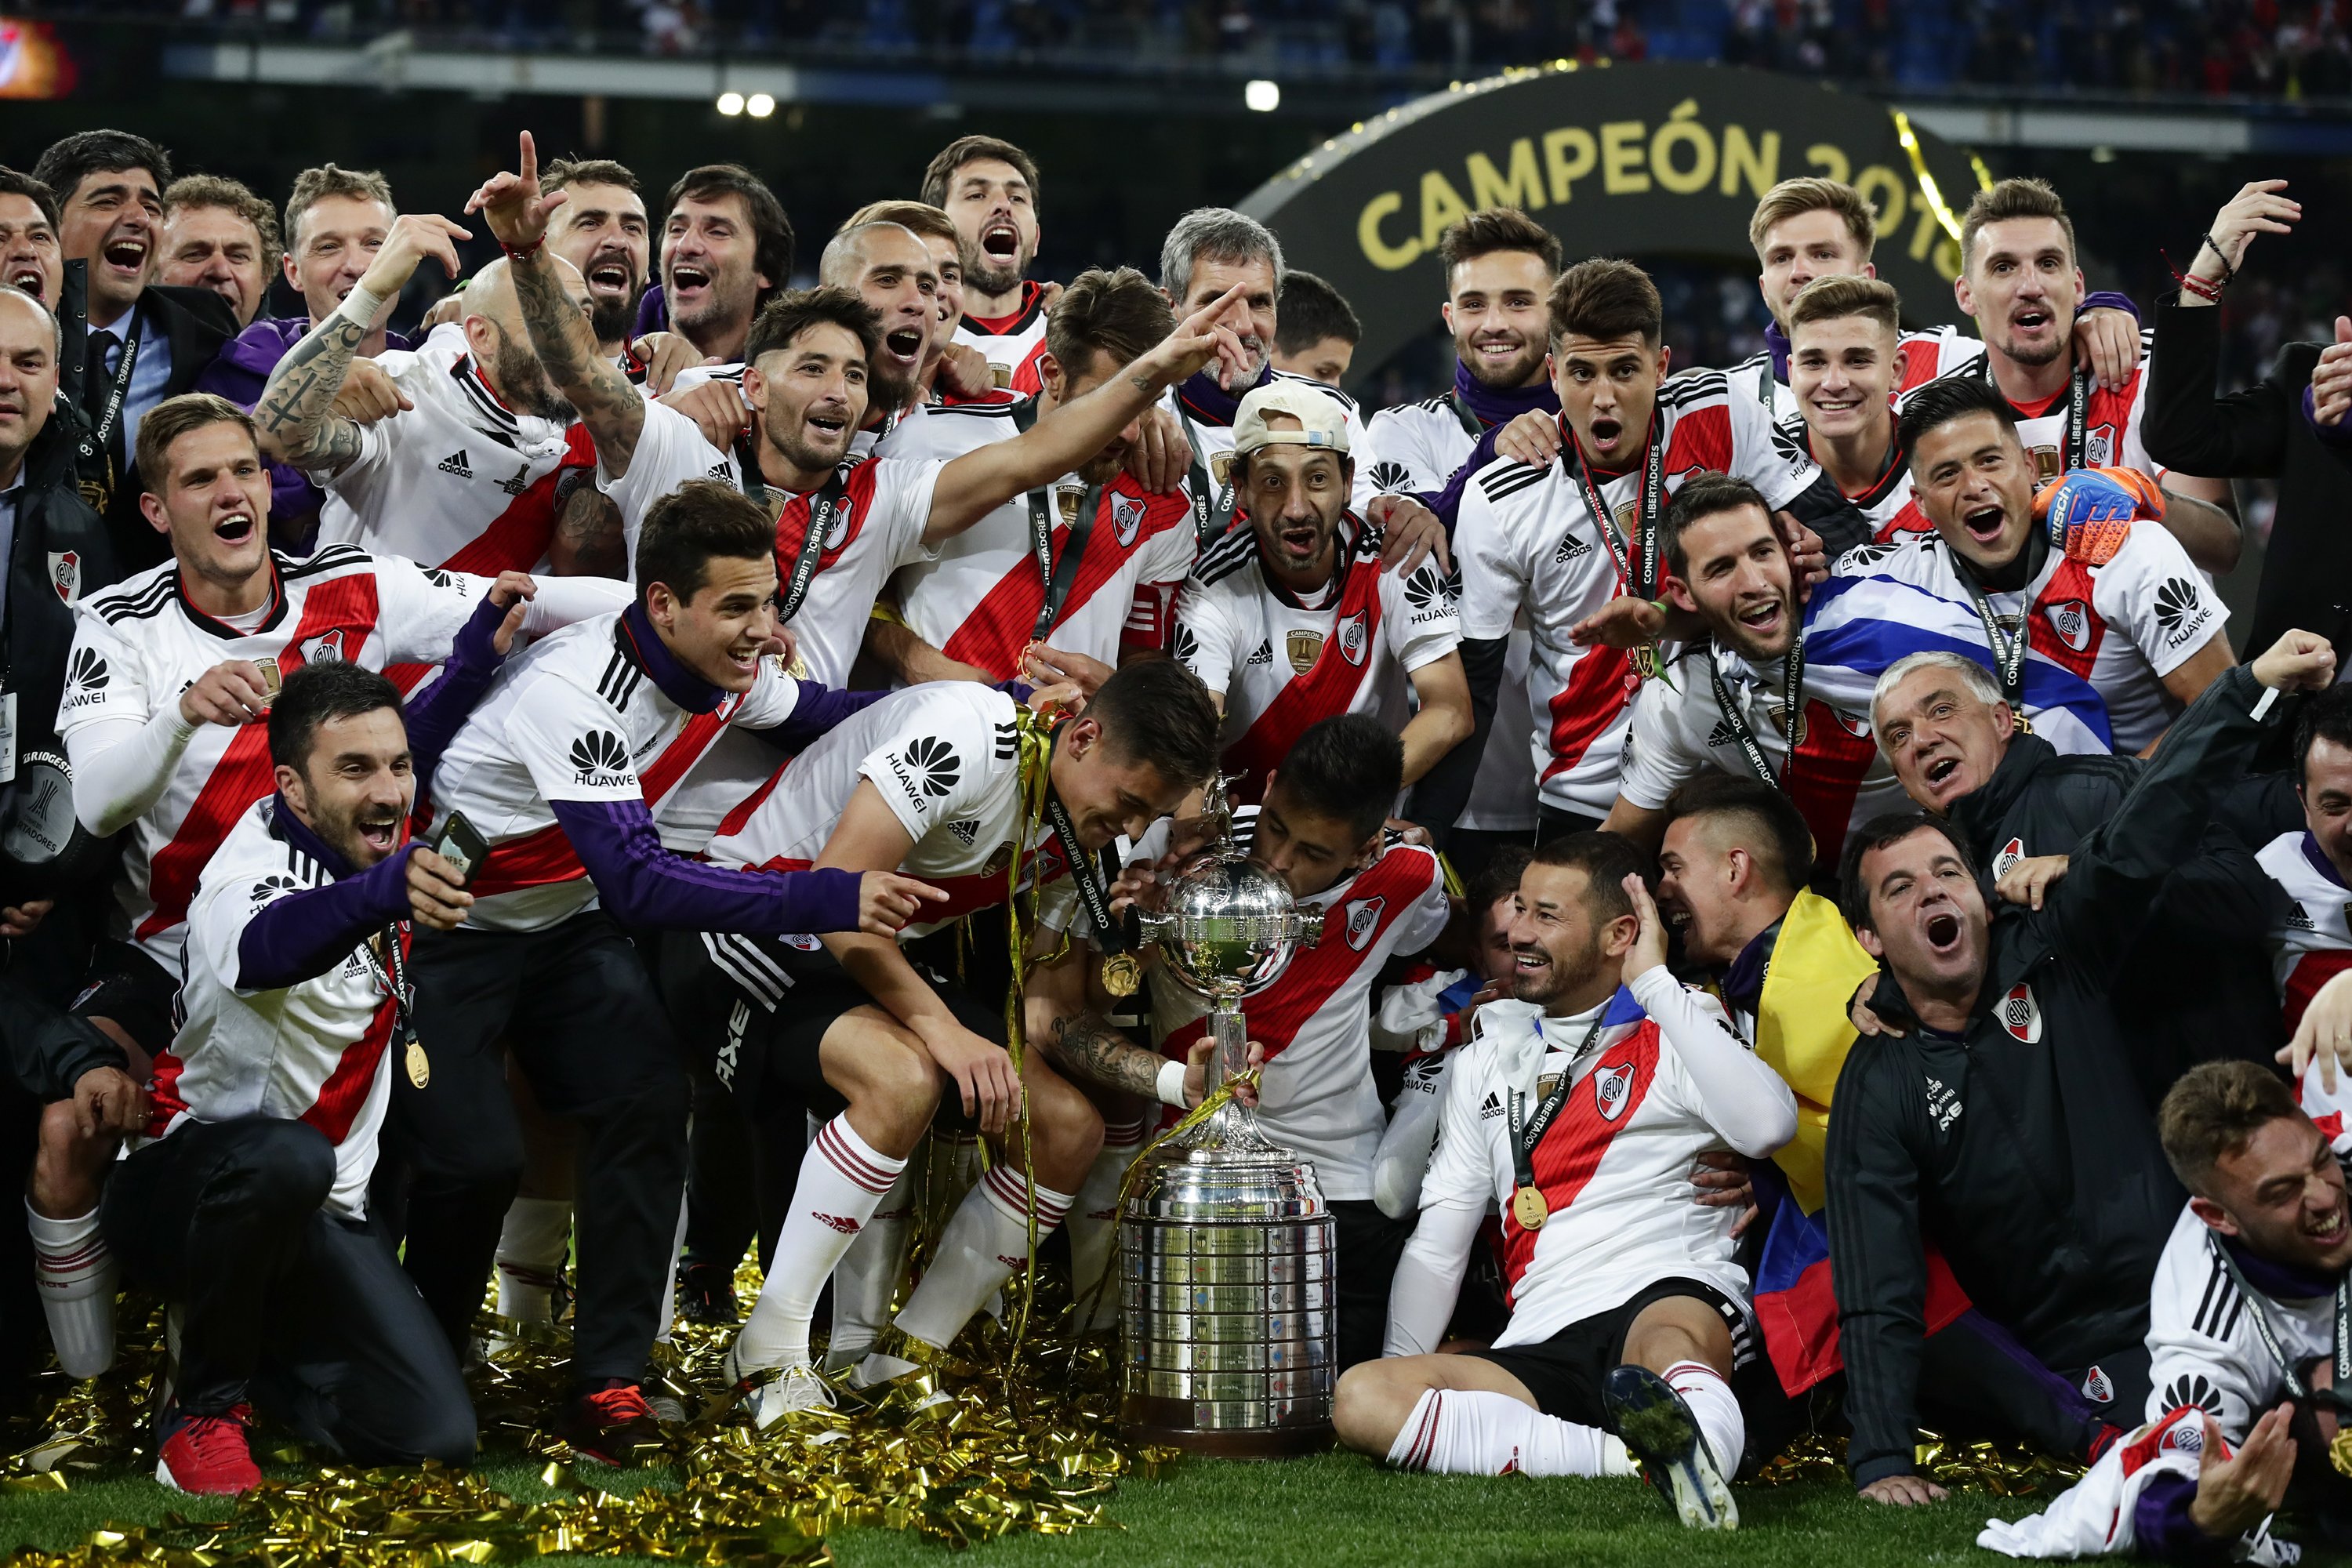 Copa Libertadores Saga Ends As River Plate Wins In Madrid